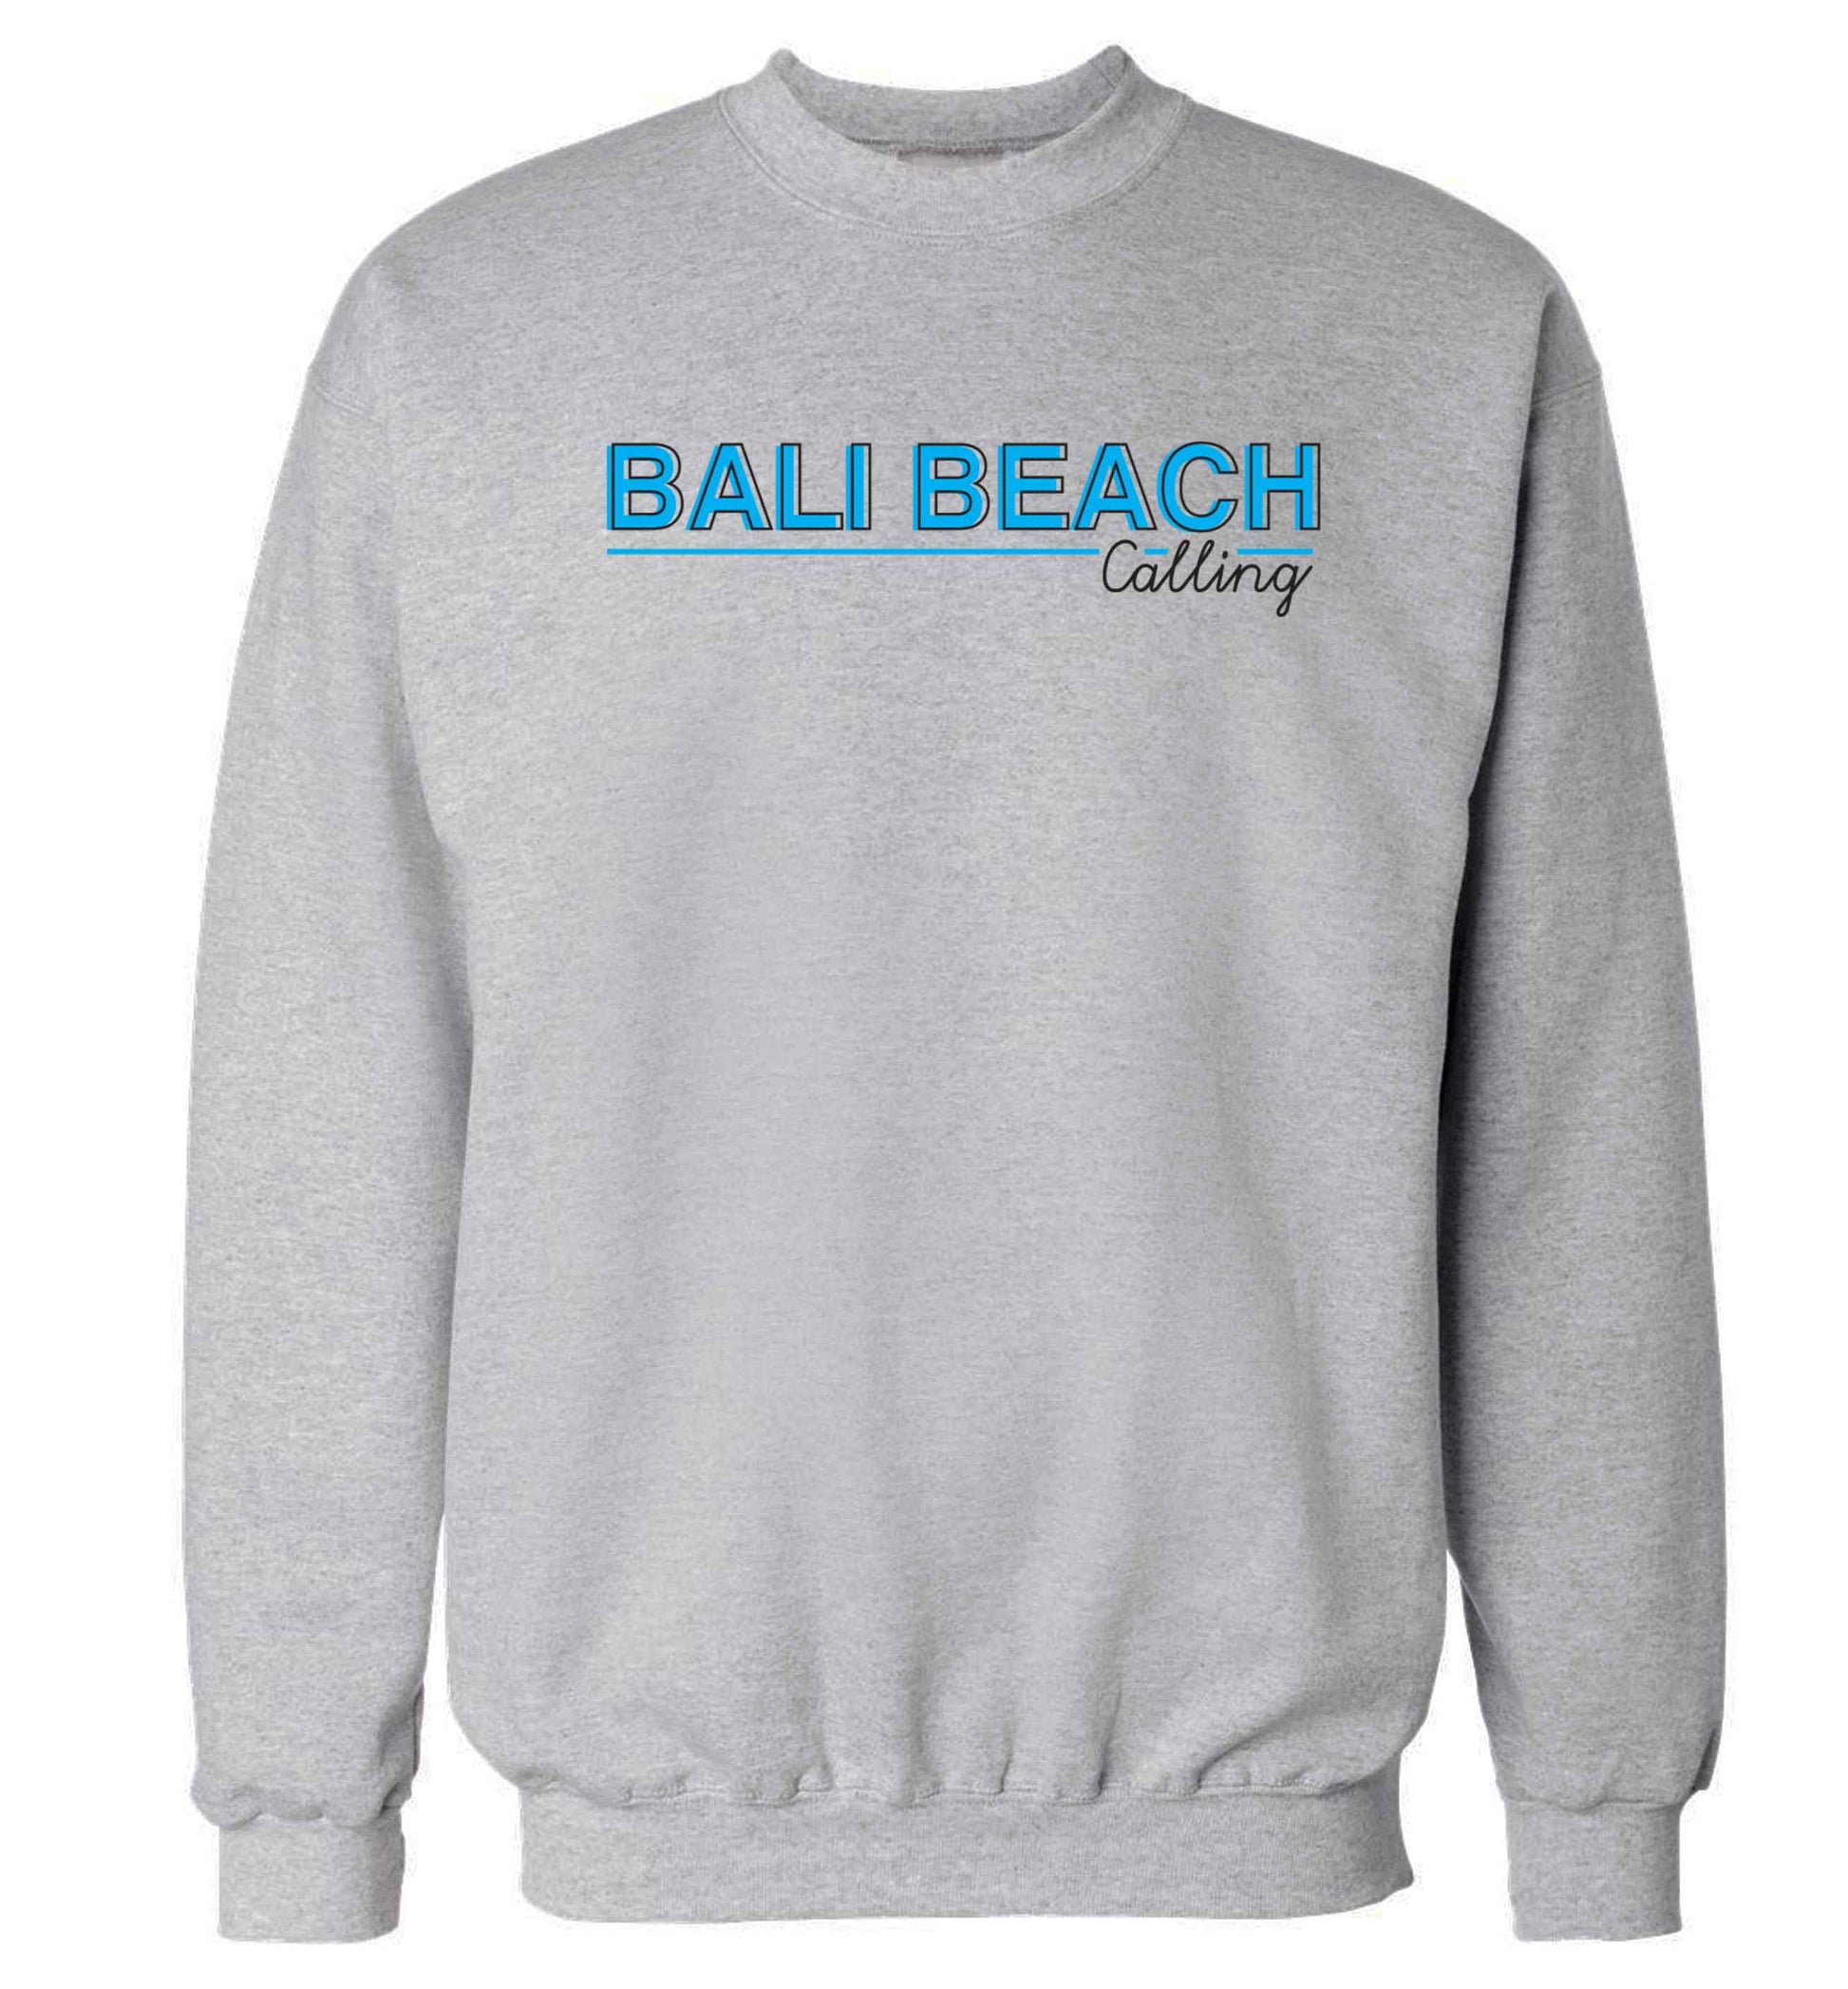 Bali beach calling Adult's unisex grey Sweater 2XL